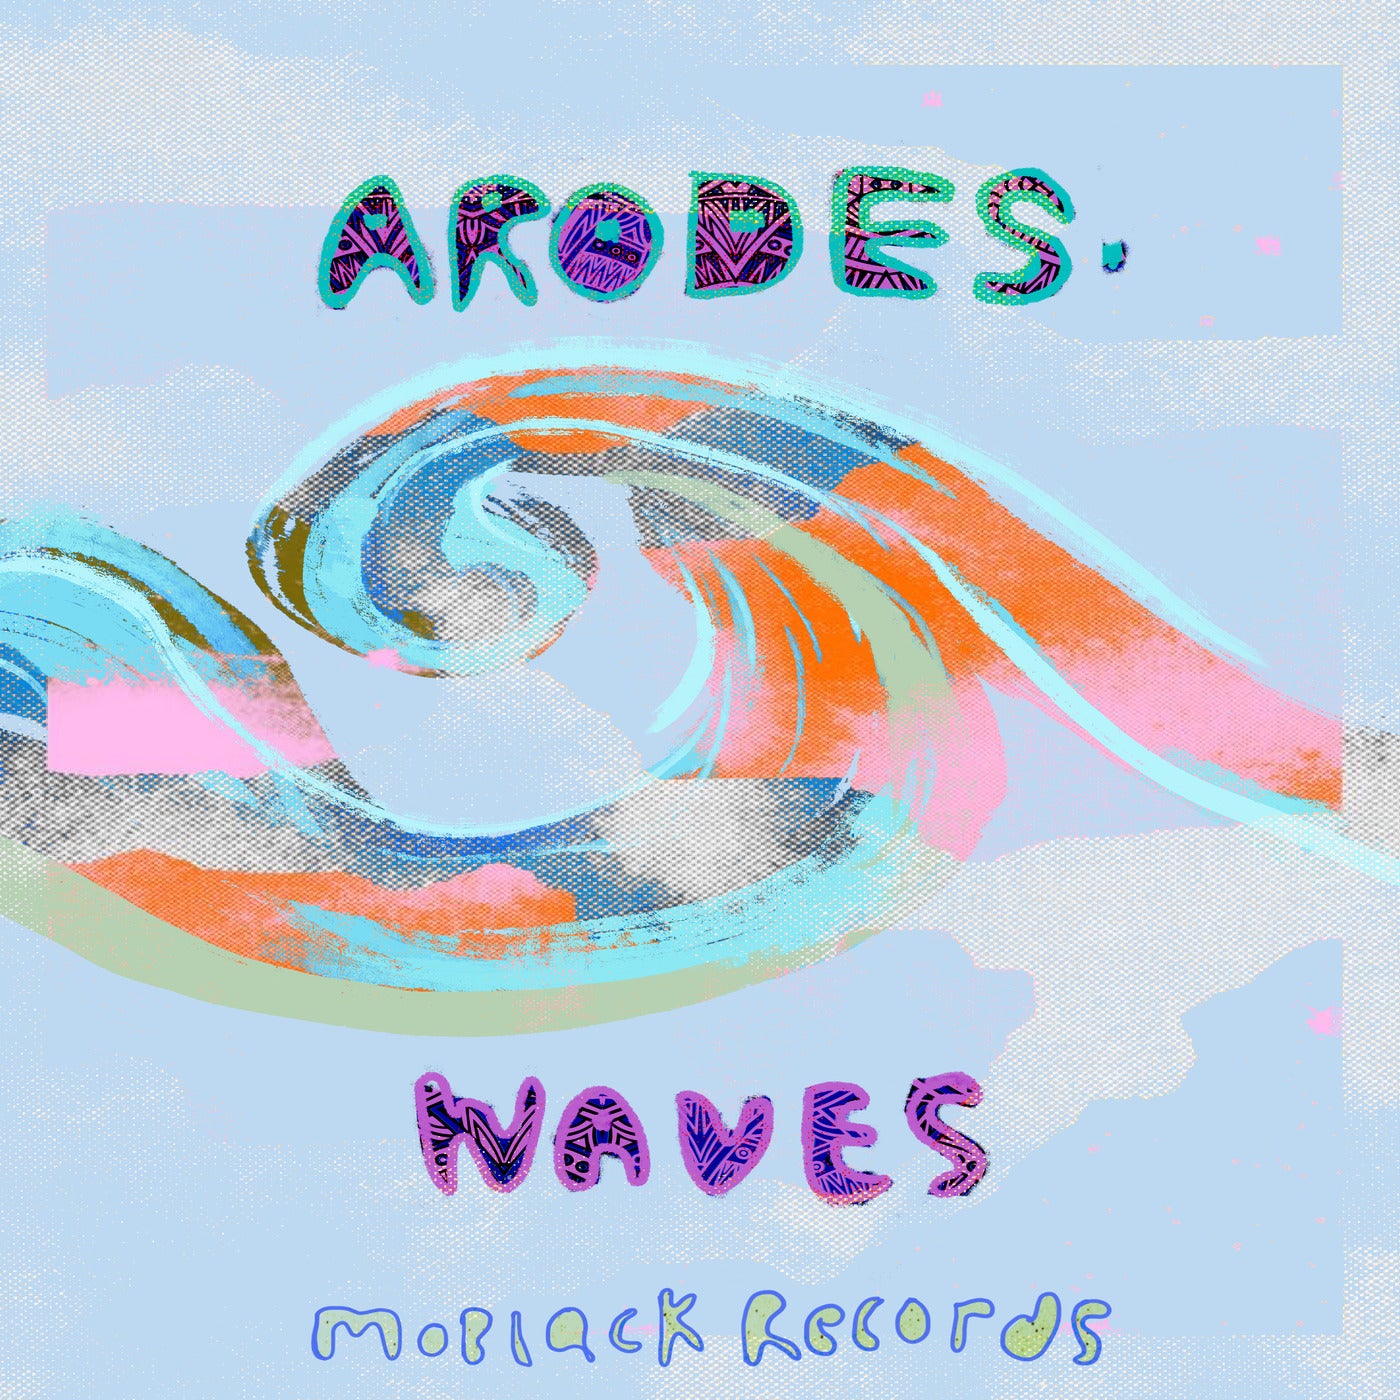 WAVES EP